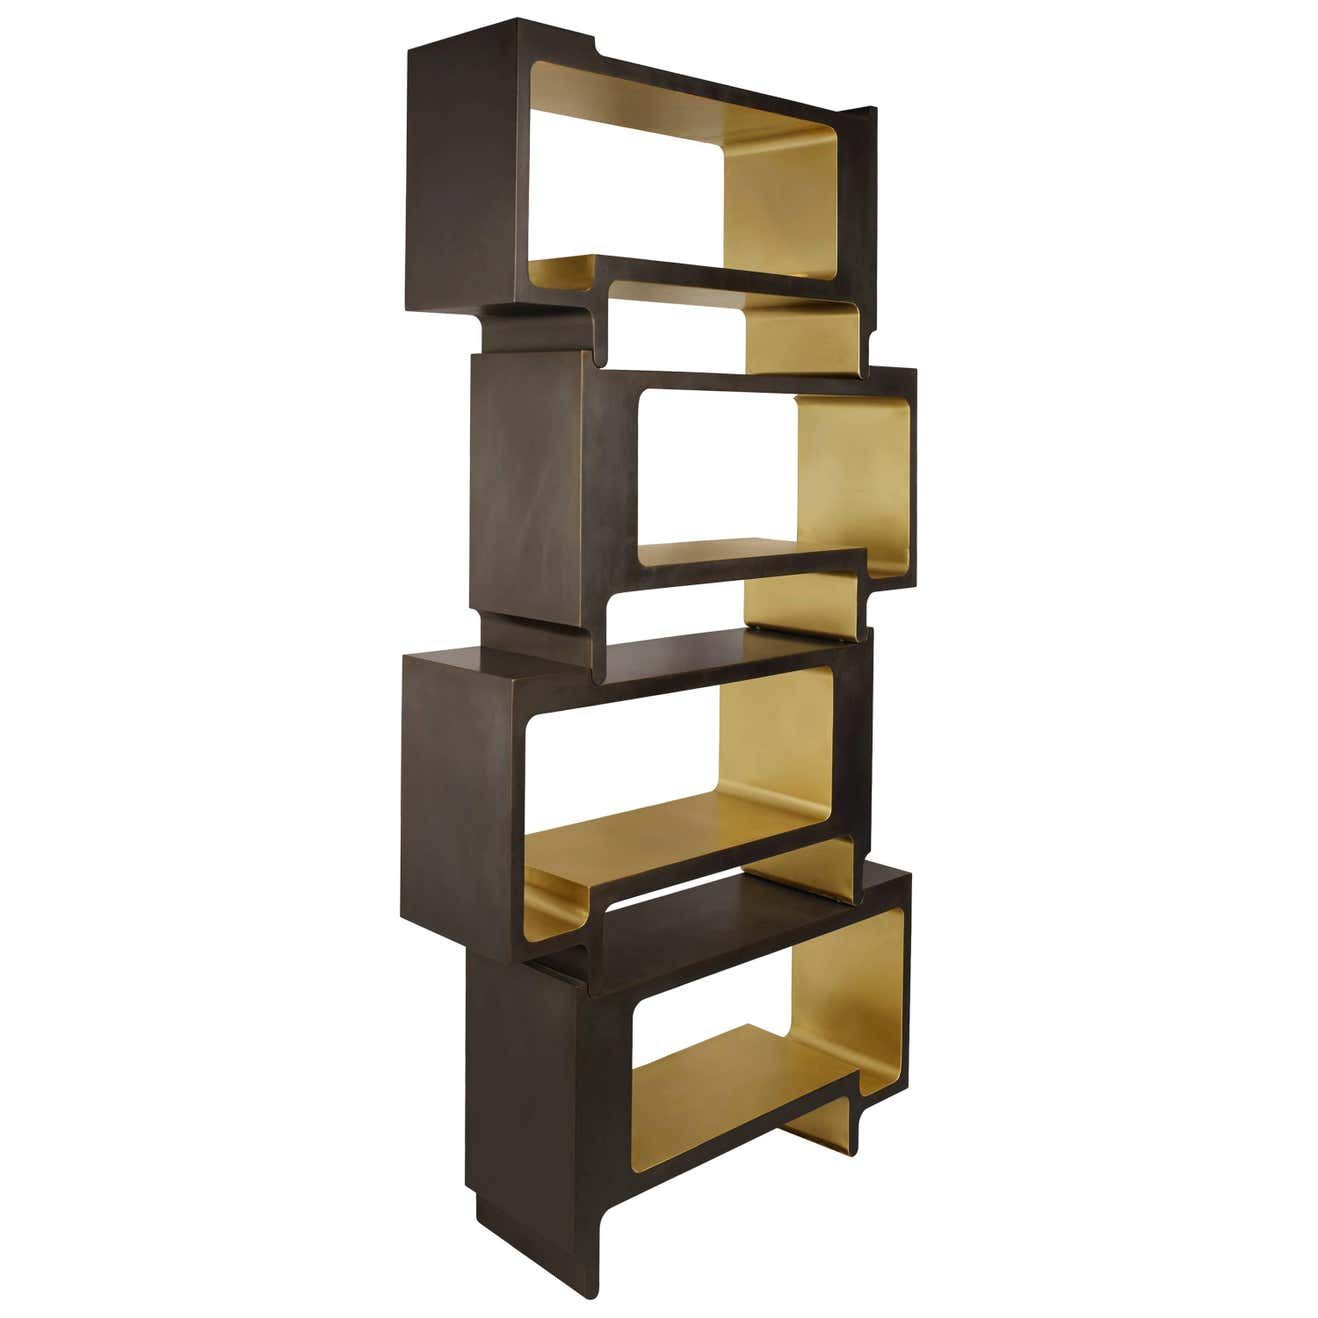 Bronze bookcase divider